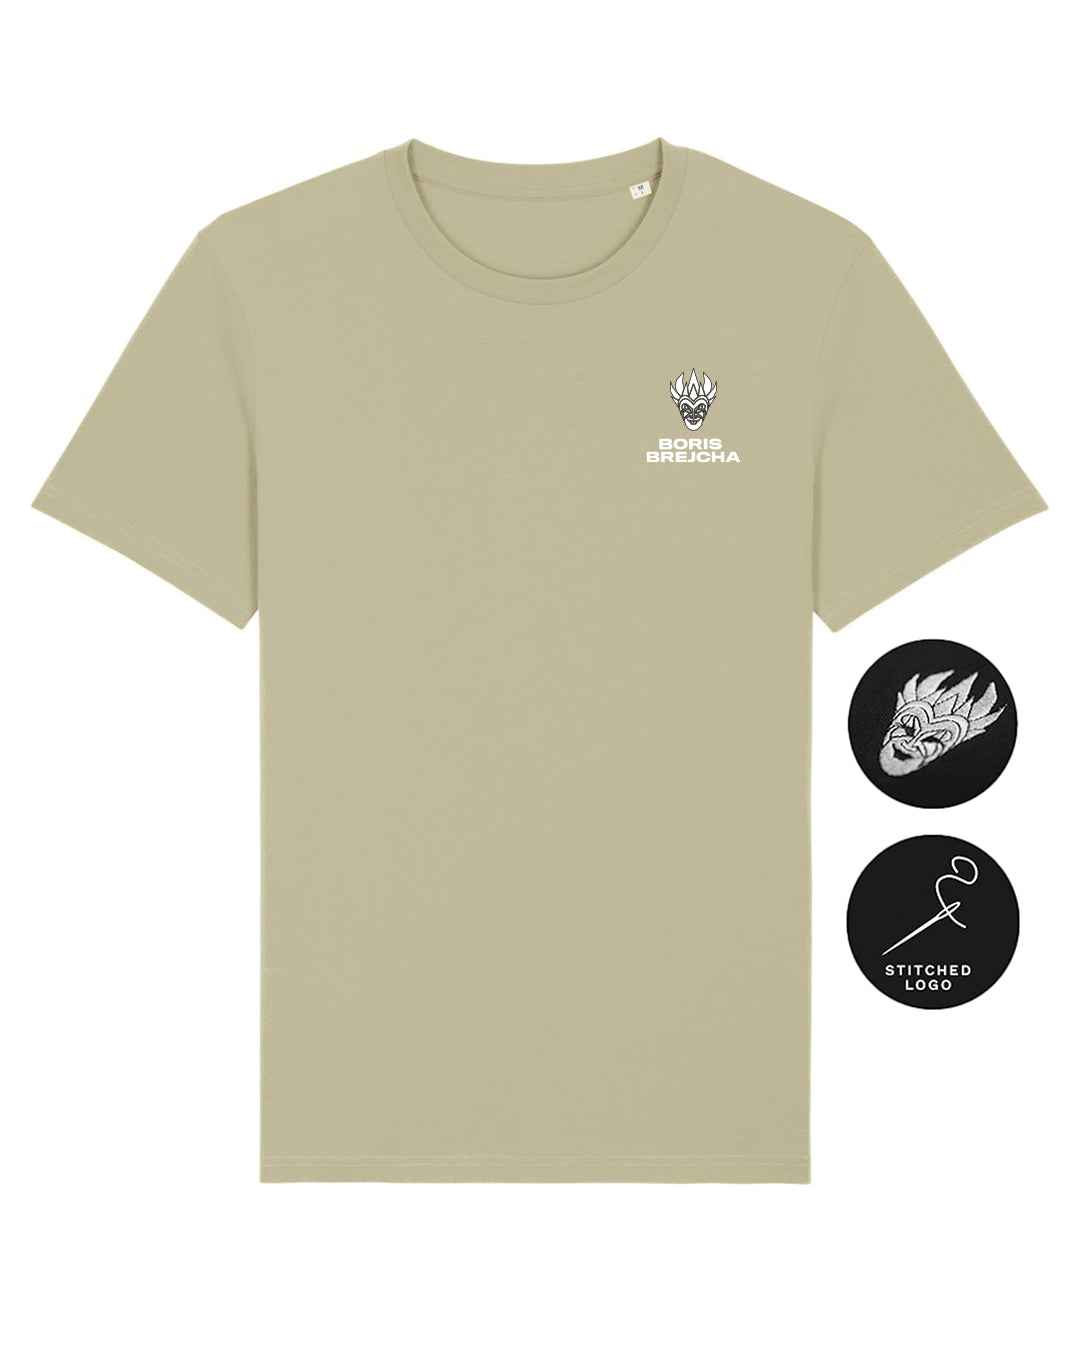 Boris Brejcha - Mini Logo T-Shirt sage (Stitched Logo)